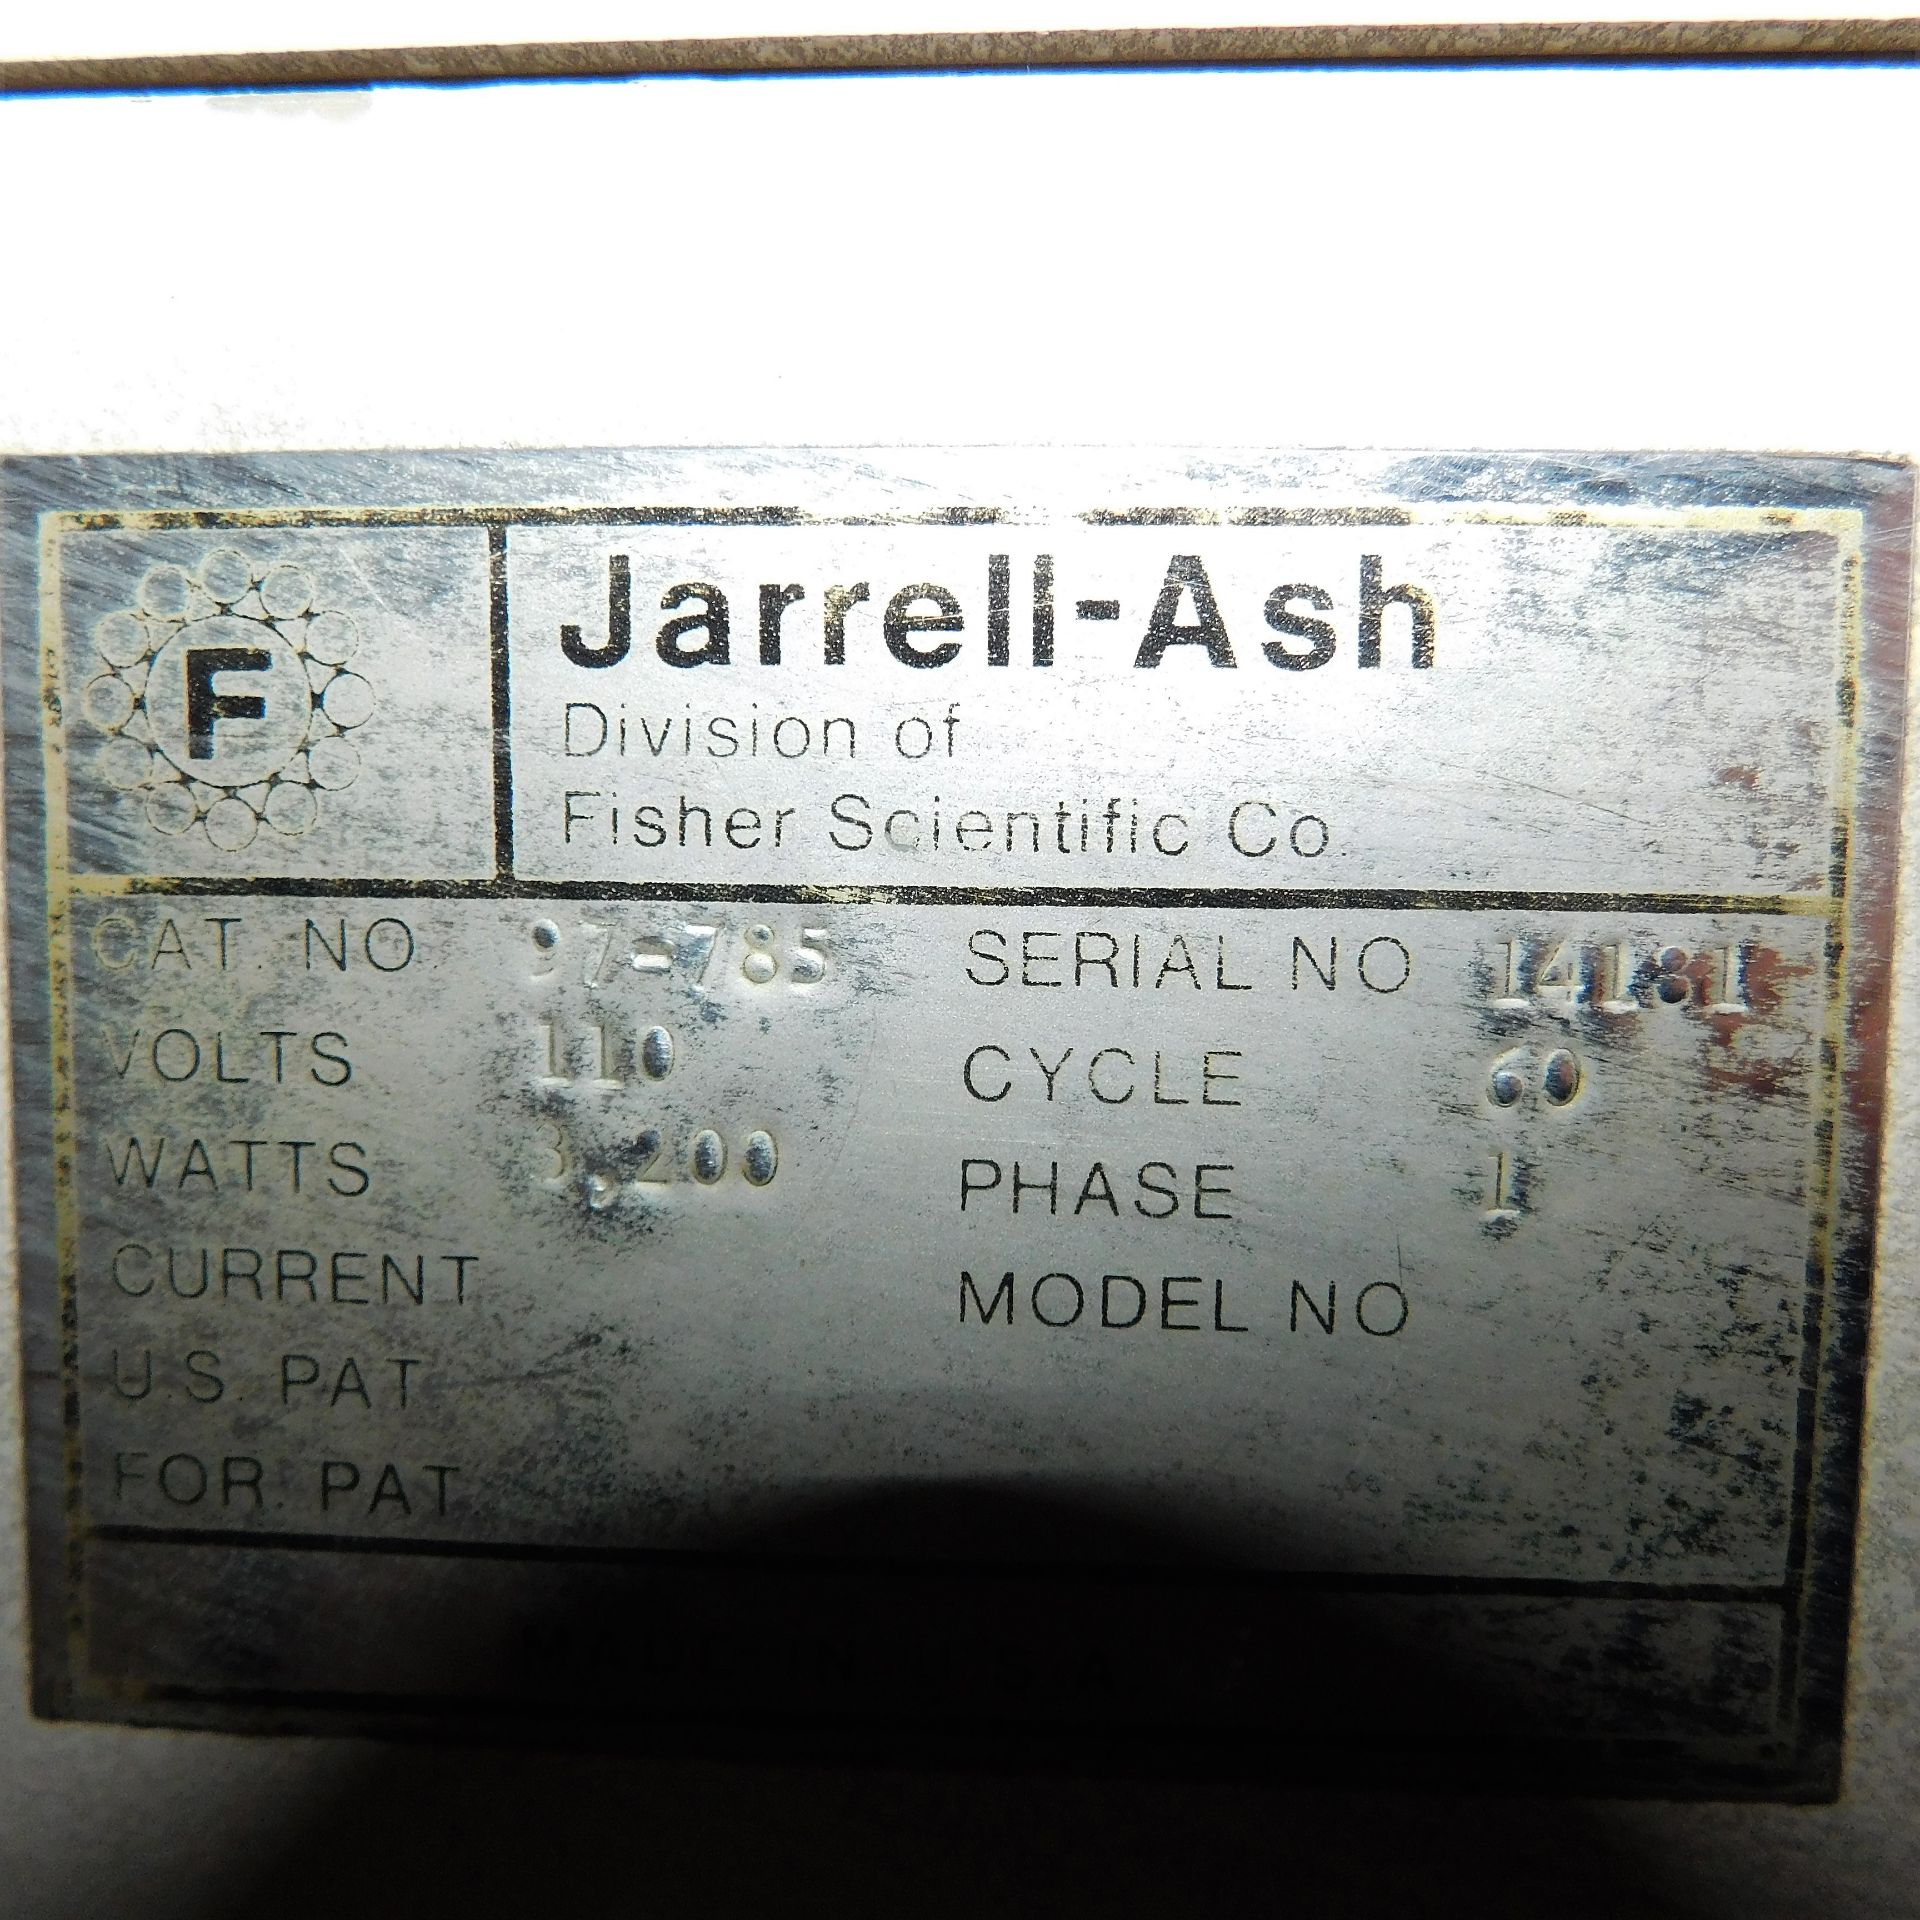 JARRELL ASH SPECTROMETER, ATOM COMP SERIES 800, S/N 14181, W/ COMPUTER, MONITOR, PRINTER, JET AFS- - Image 3 of 3